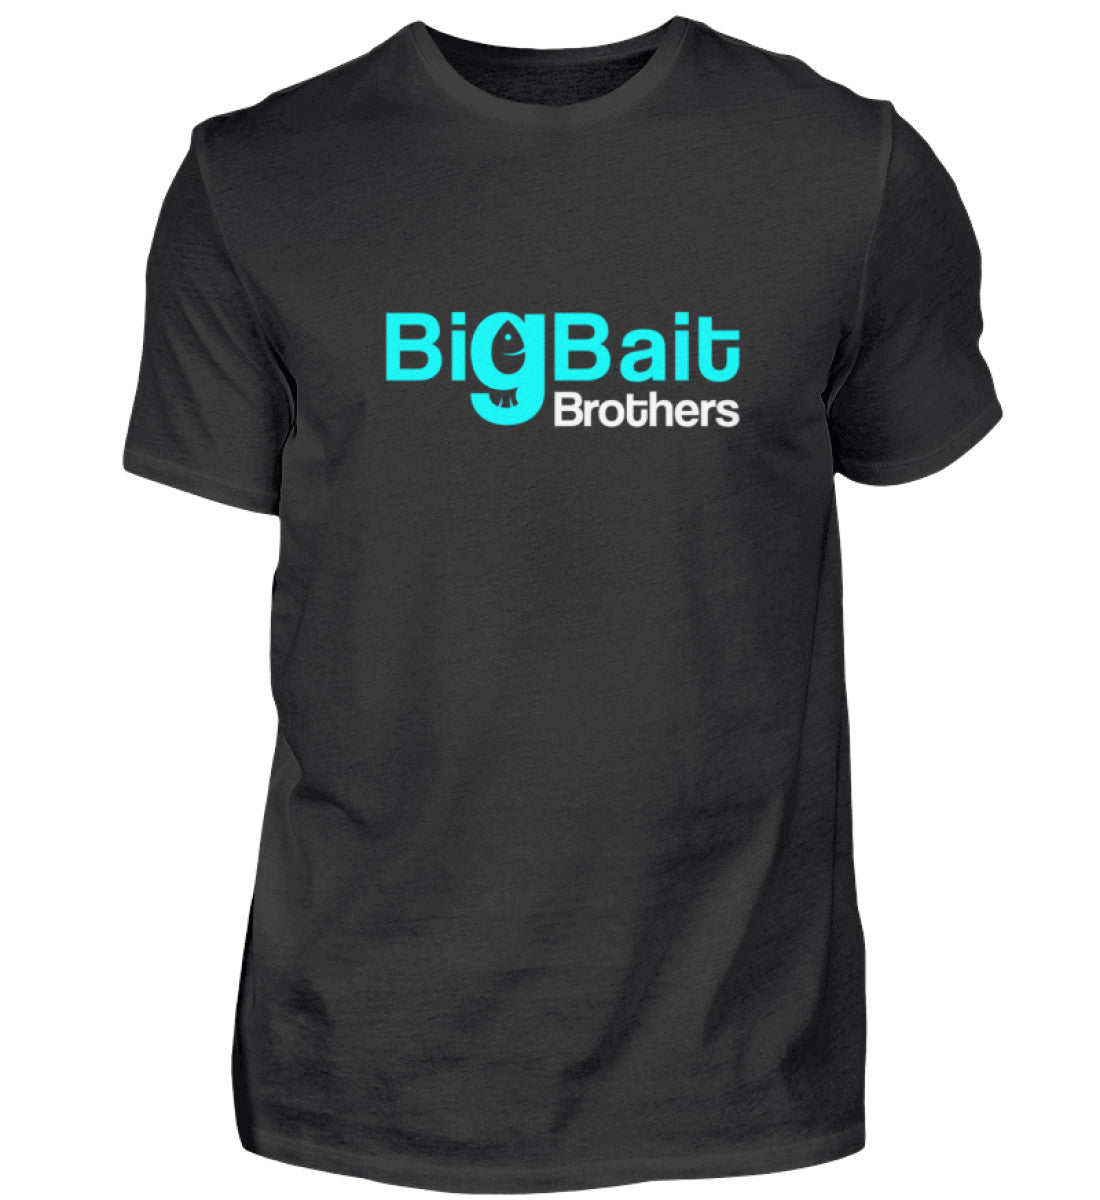 BigBaitBrothers Herren - Premium T-Shirt - Exklusiv Herren Premium Shirt von Shirtee - Nur €23.95! Neu bei BigBaitBrothers